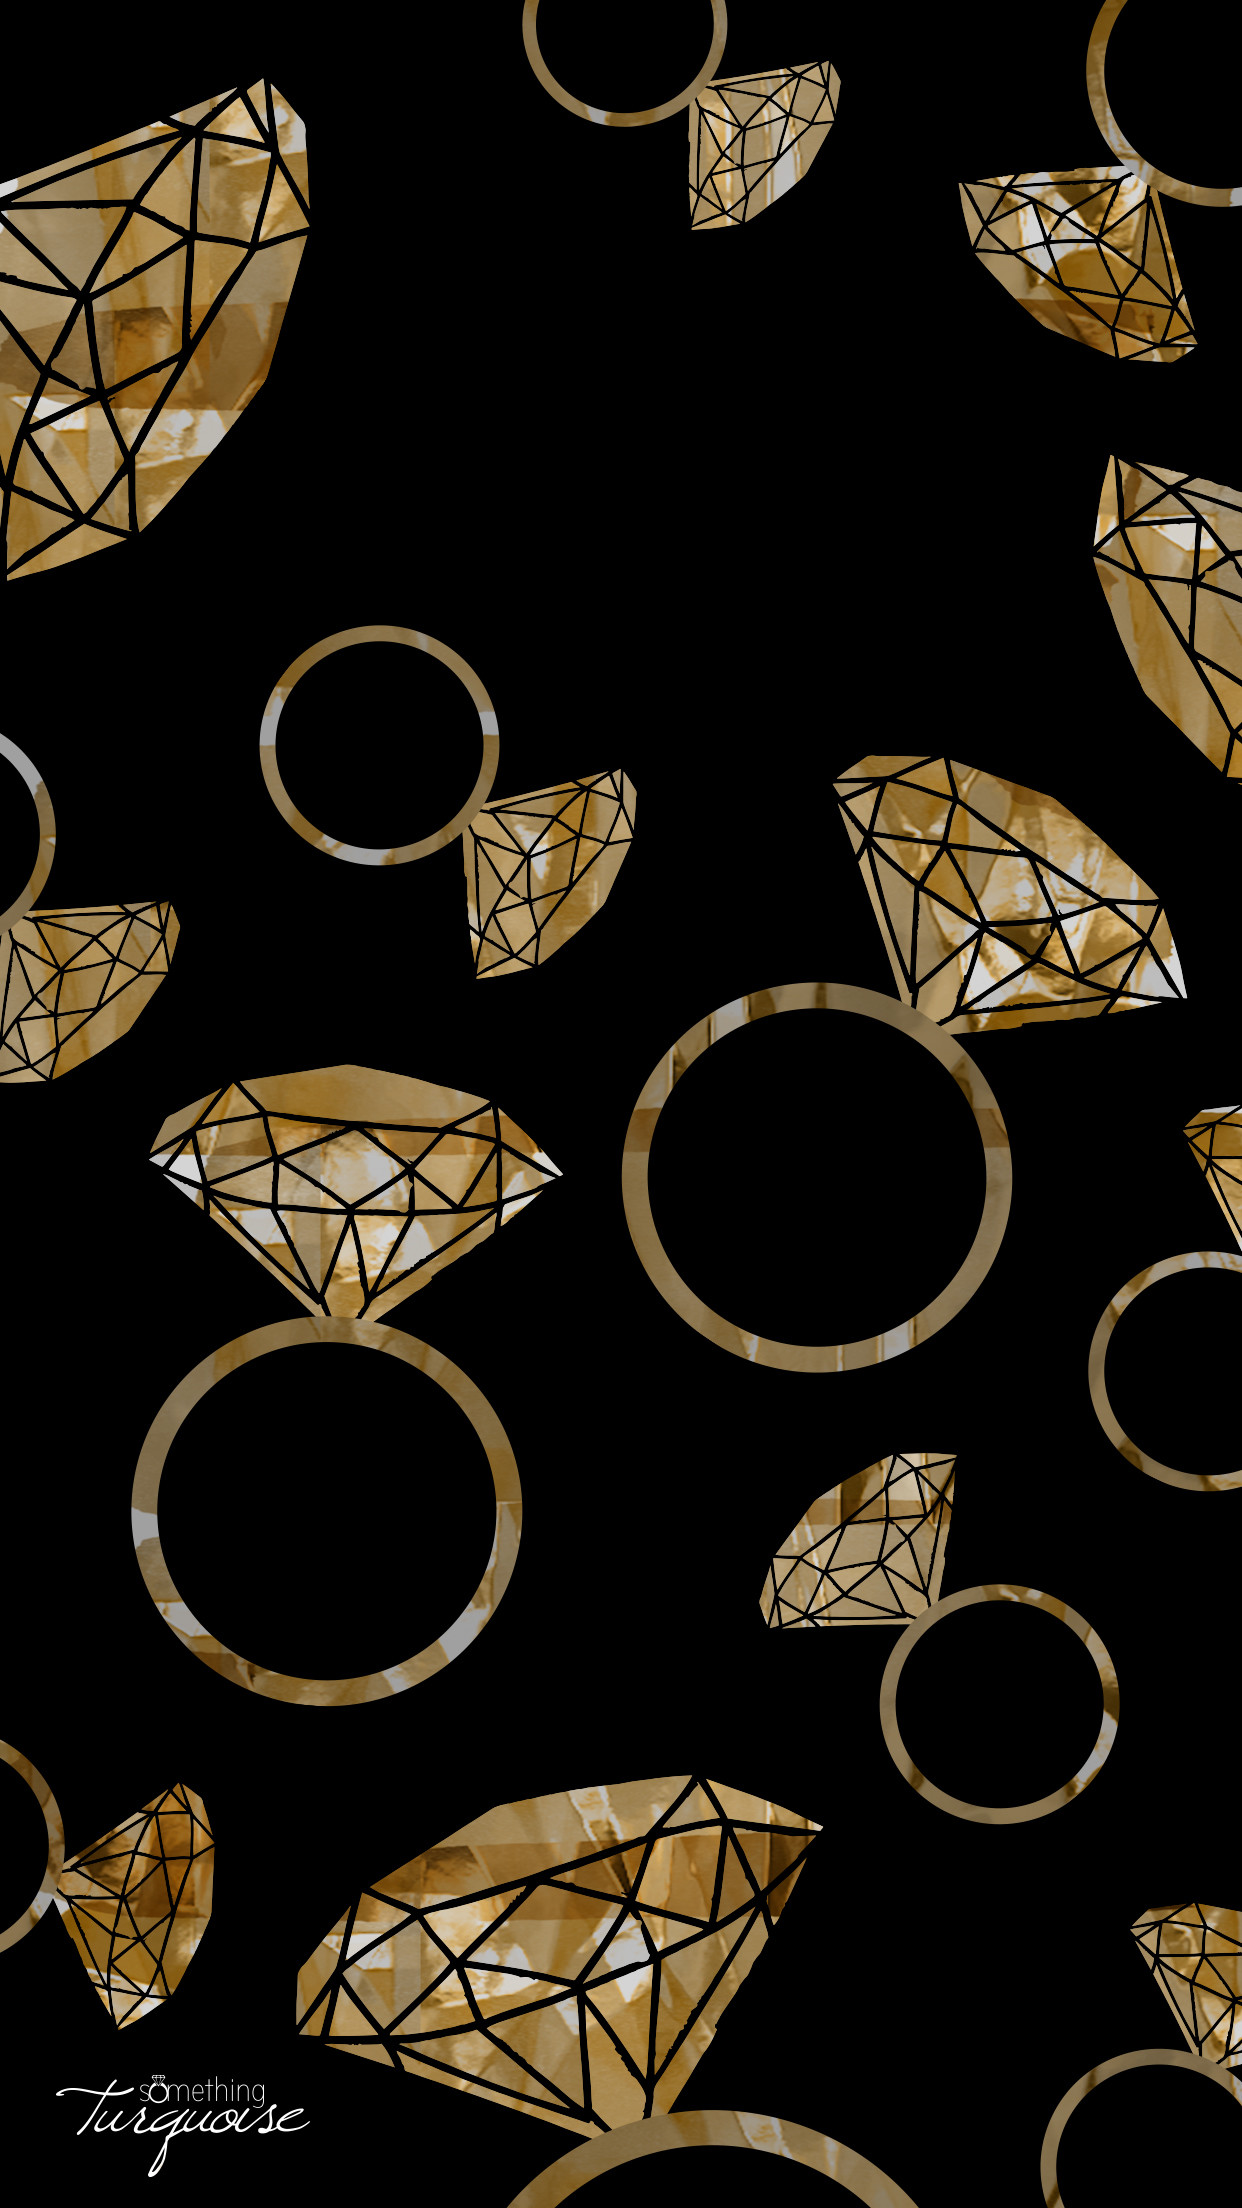 FREE gold diamond ring iPhone wallpaper!